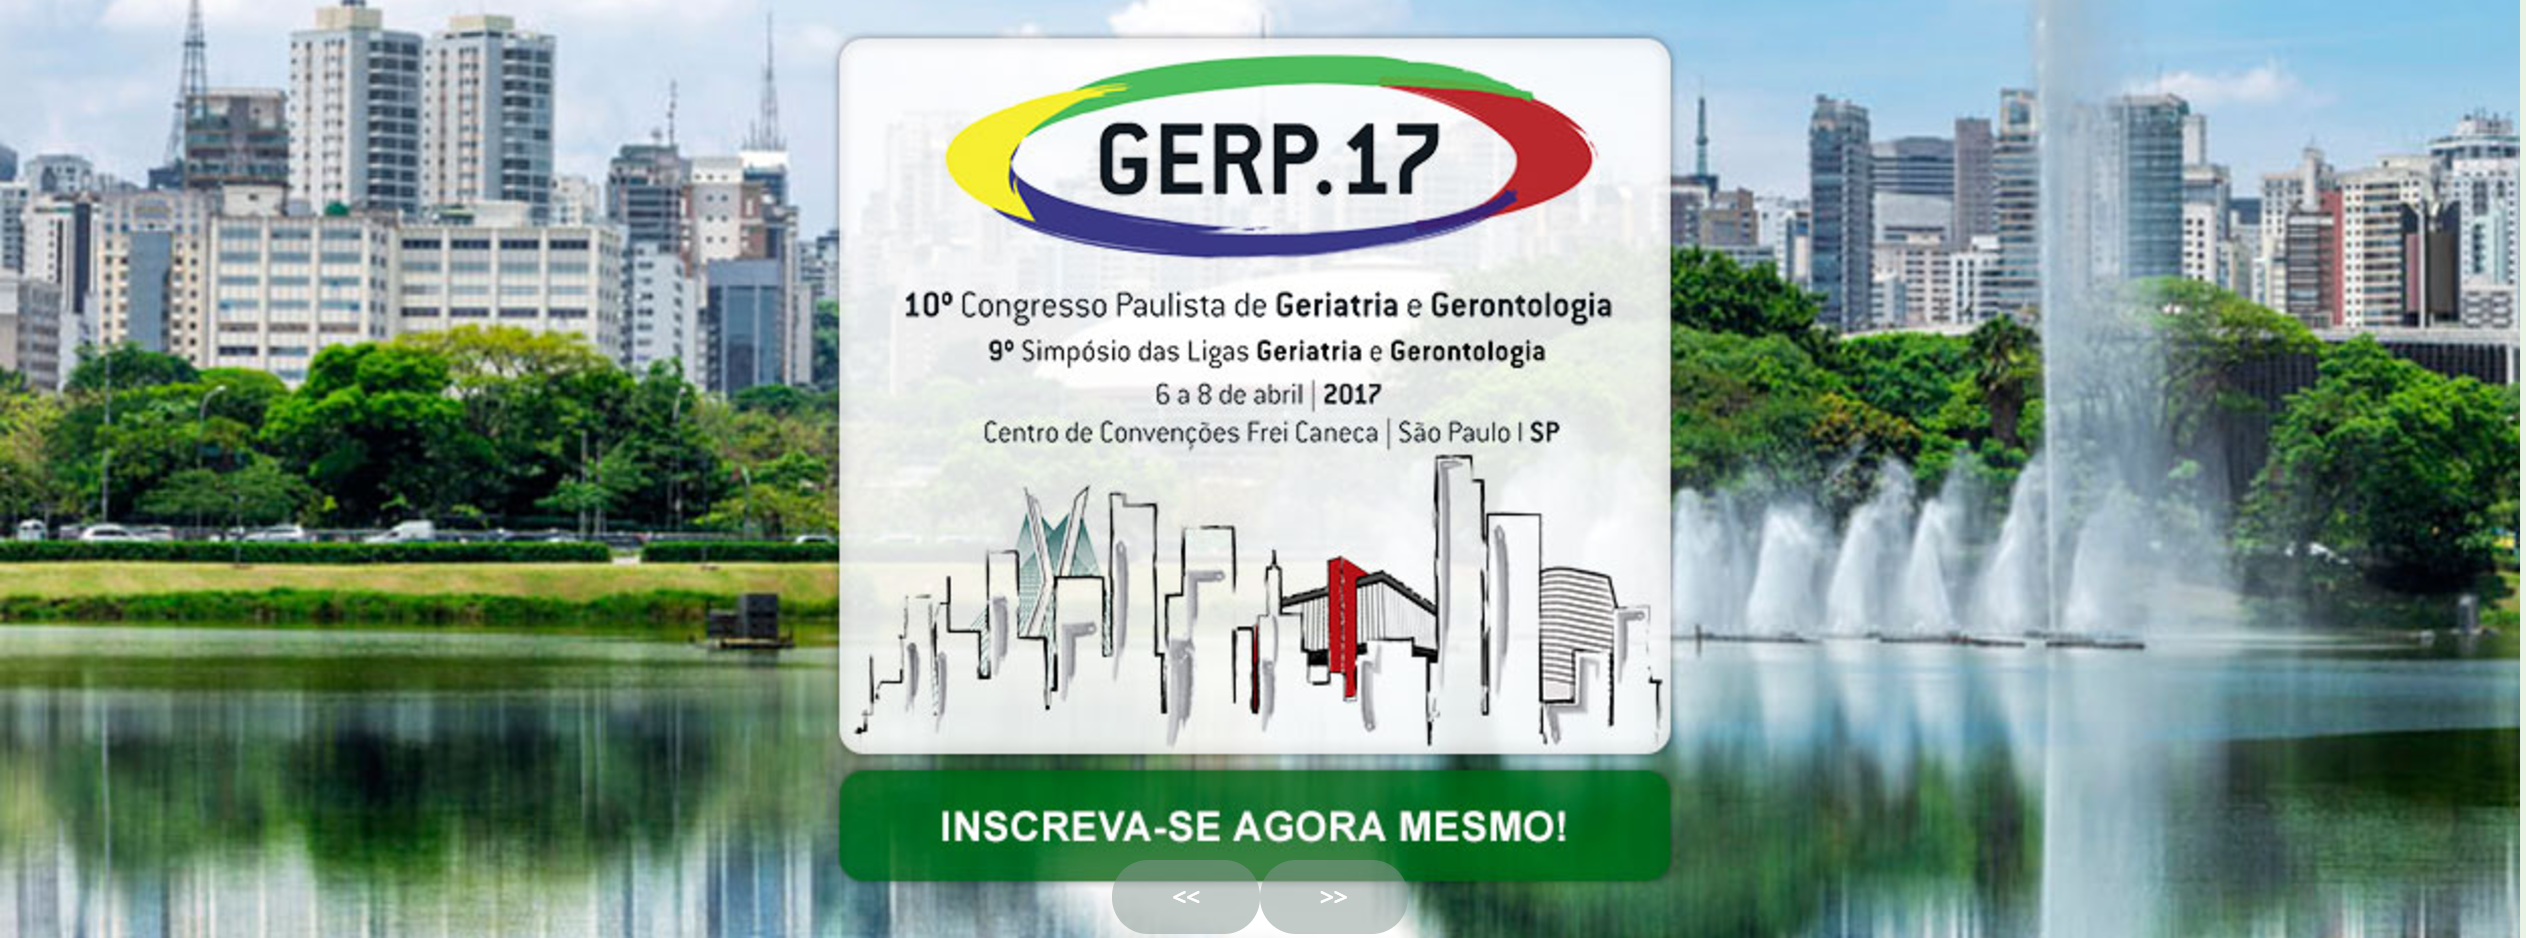 GERP.17: Uma entrevista com a presidente Maisa Kairalla